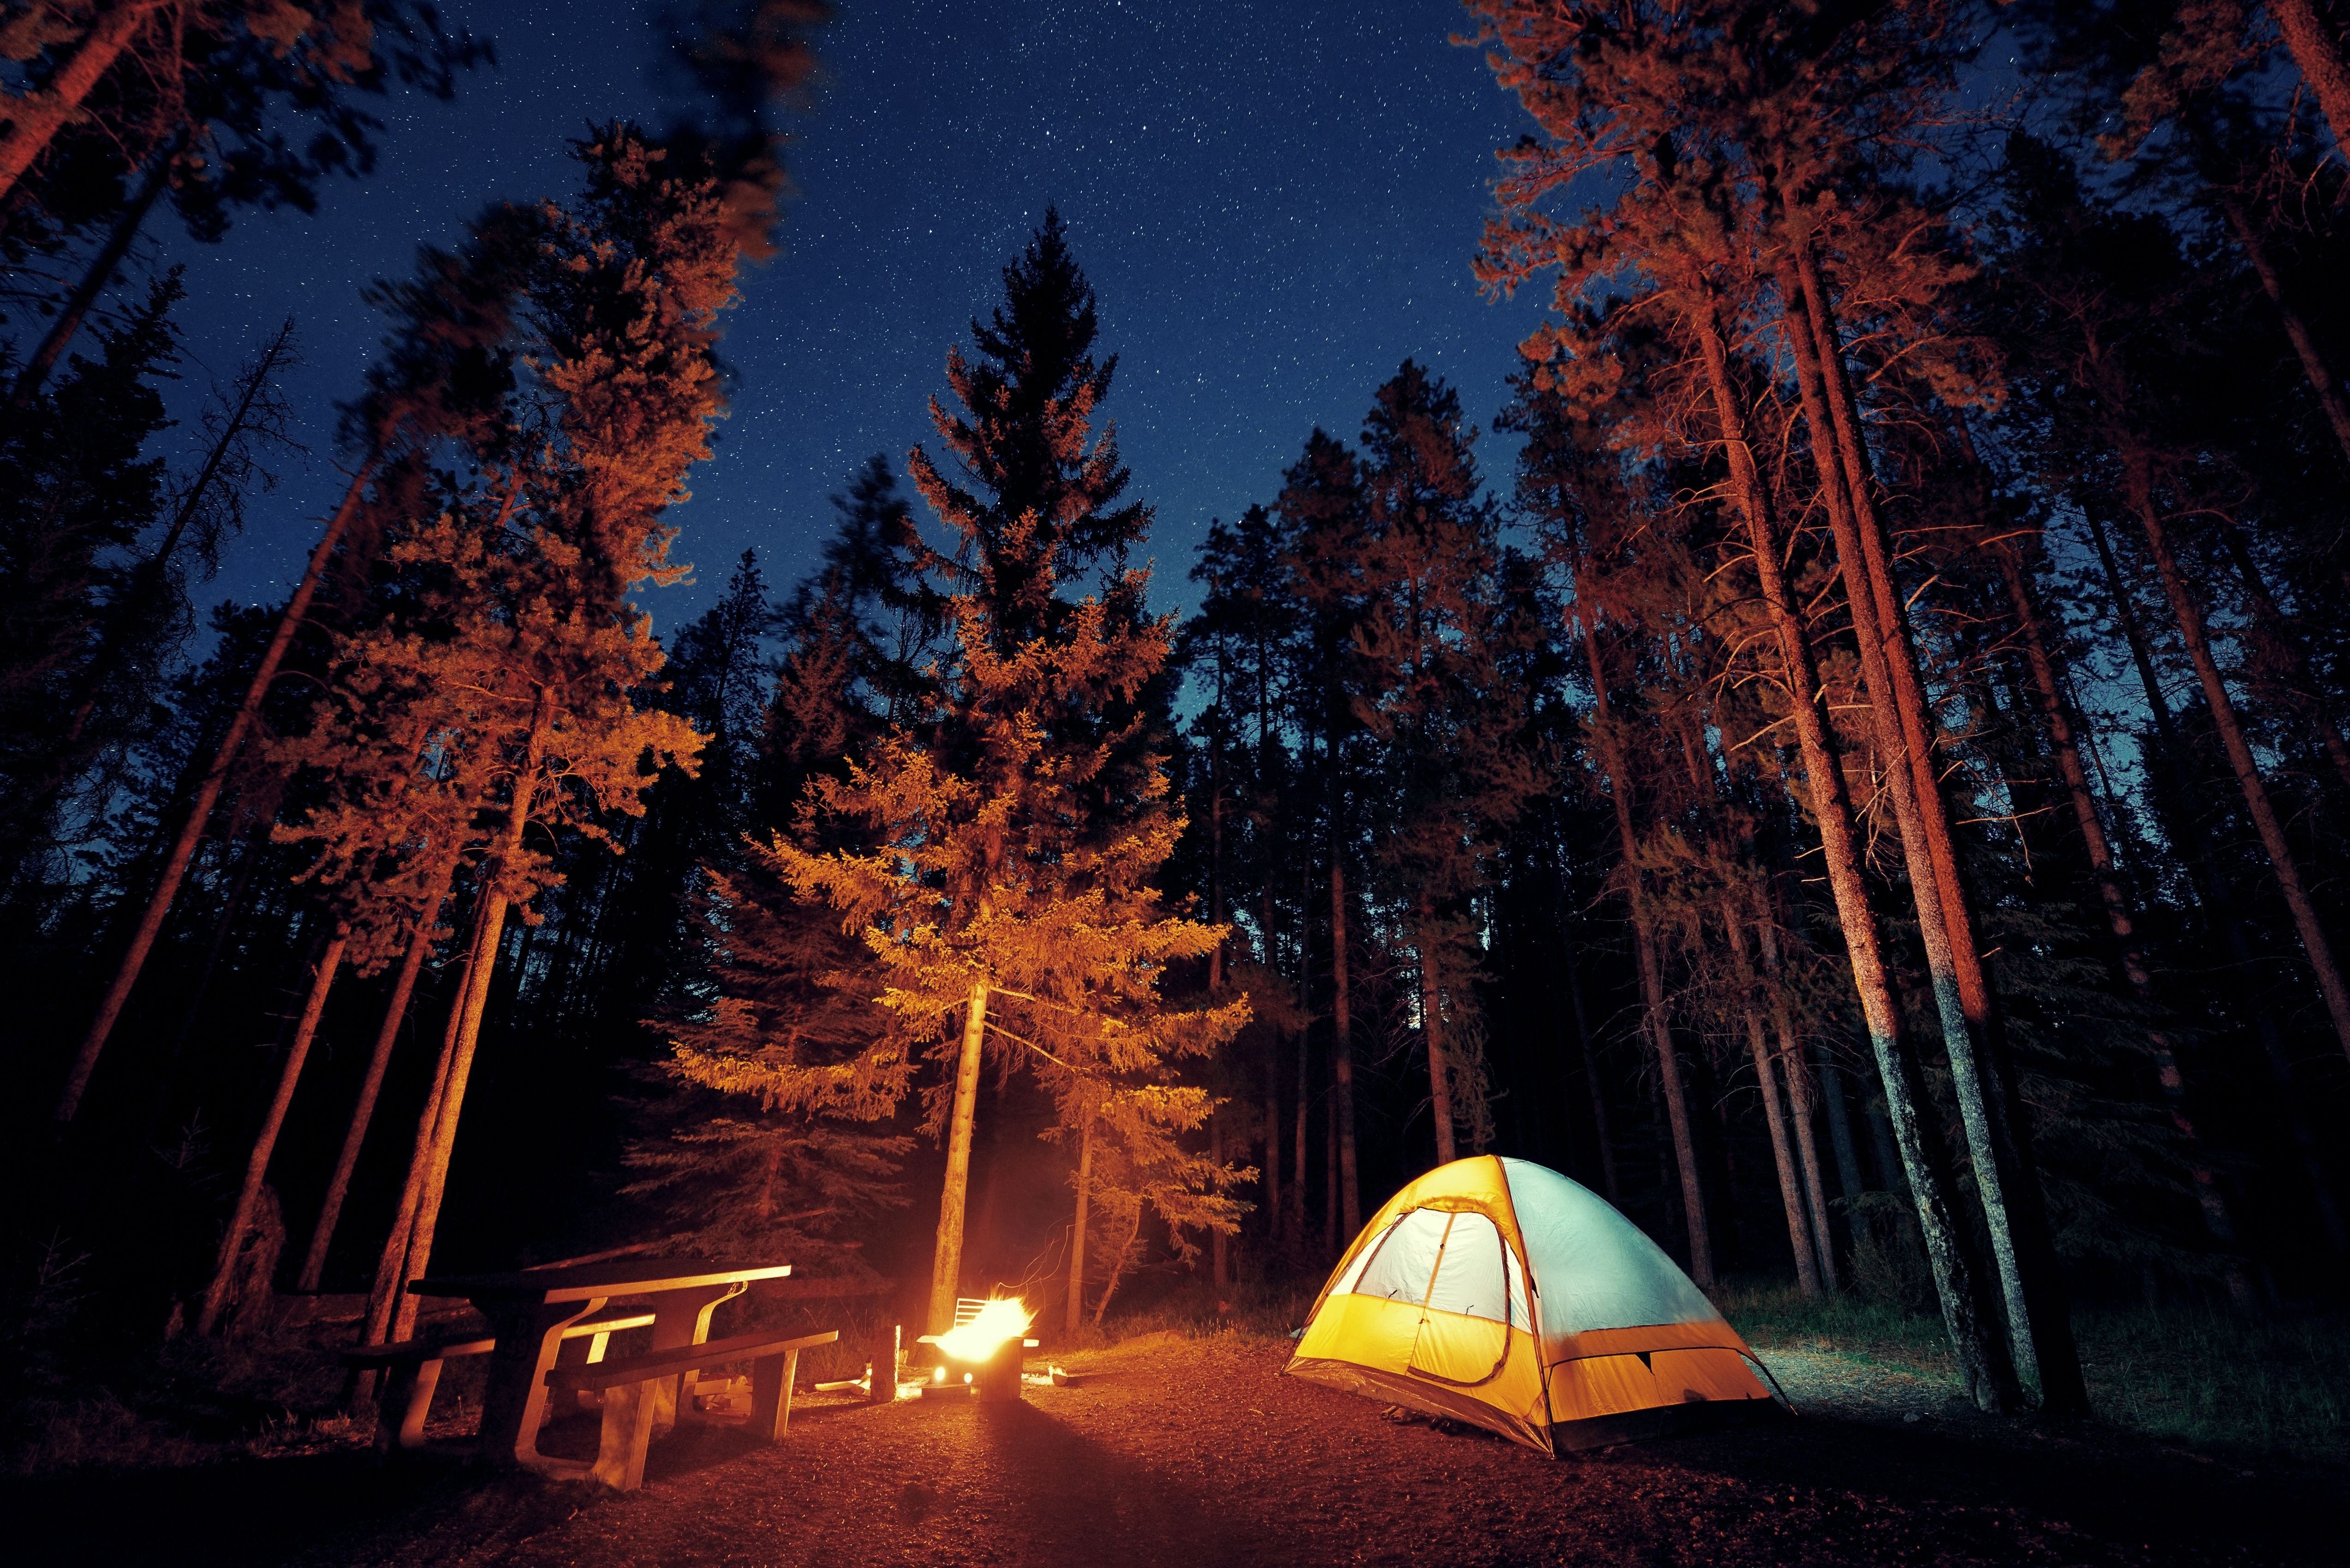 When we go camping. Палатка Camping Tent. Палатка костёр кемпинг. Кемпинг атмосфера Тургояк. Кемпинг на природе.